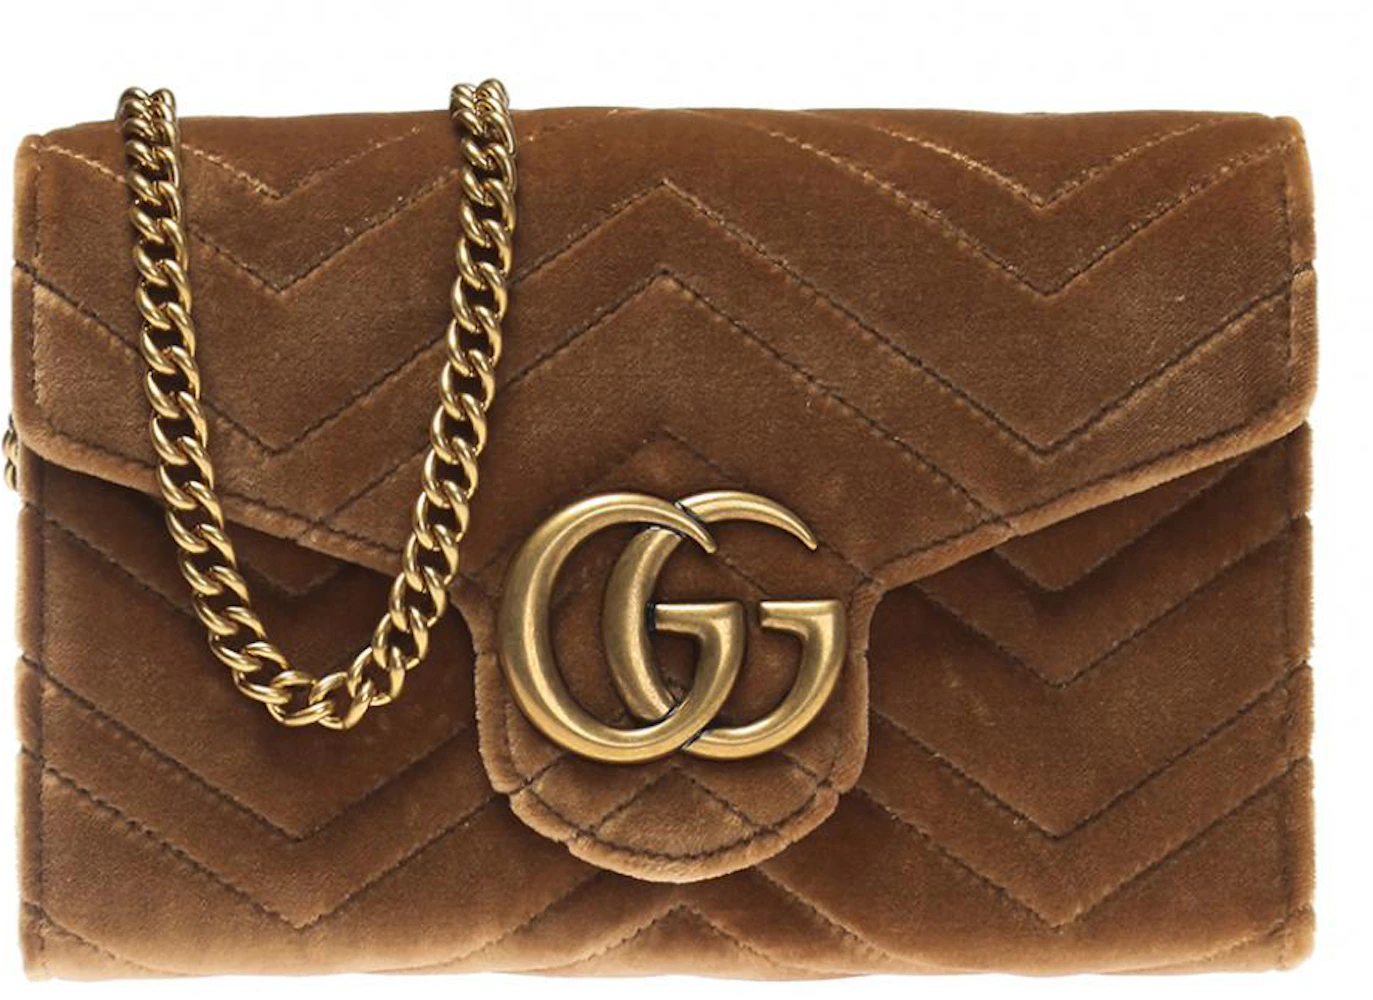 Gucci Supermini Gg Marmont 20 Matelasse Leather Shoulder Bag, $890